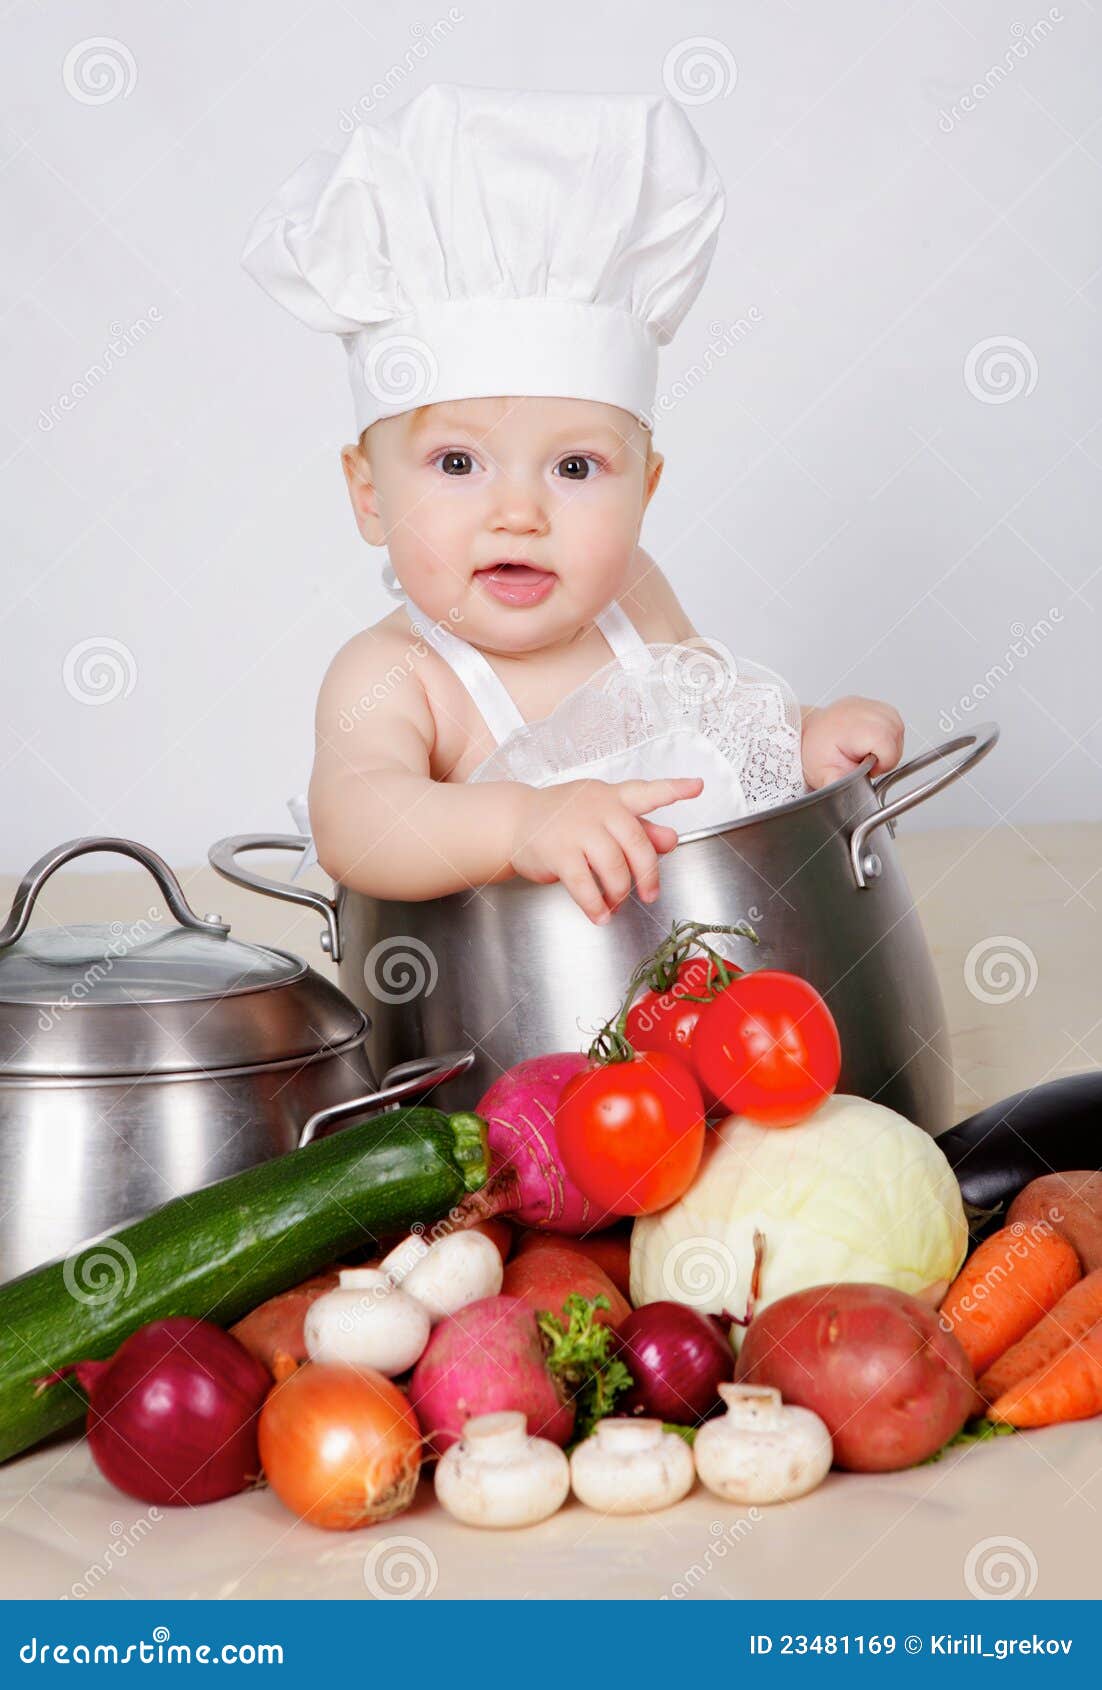 صور الاطفال.... Baby-cook-23481169